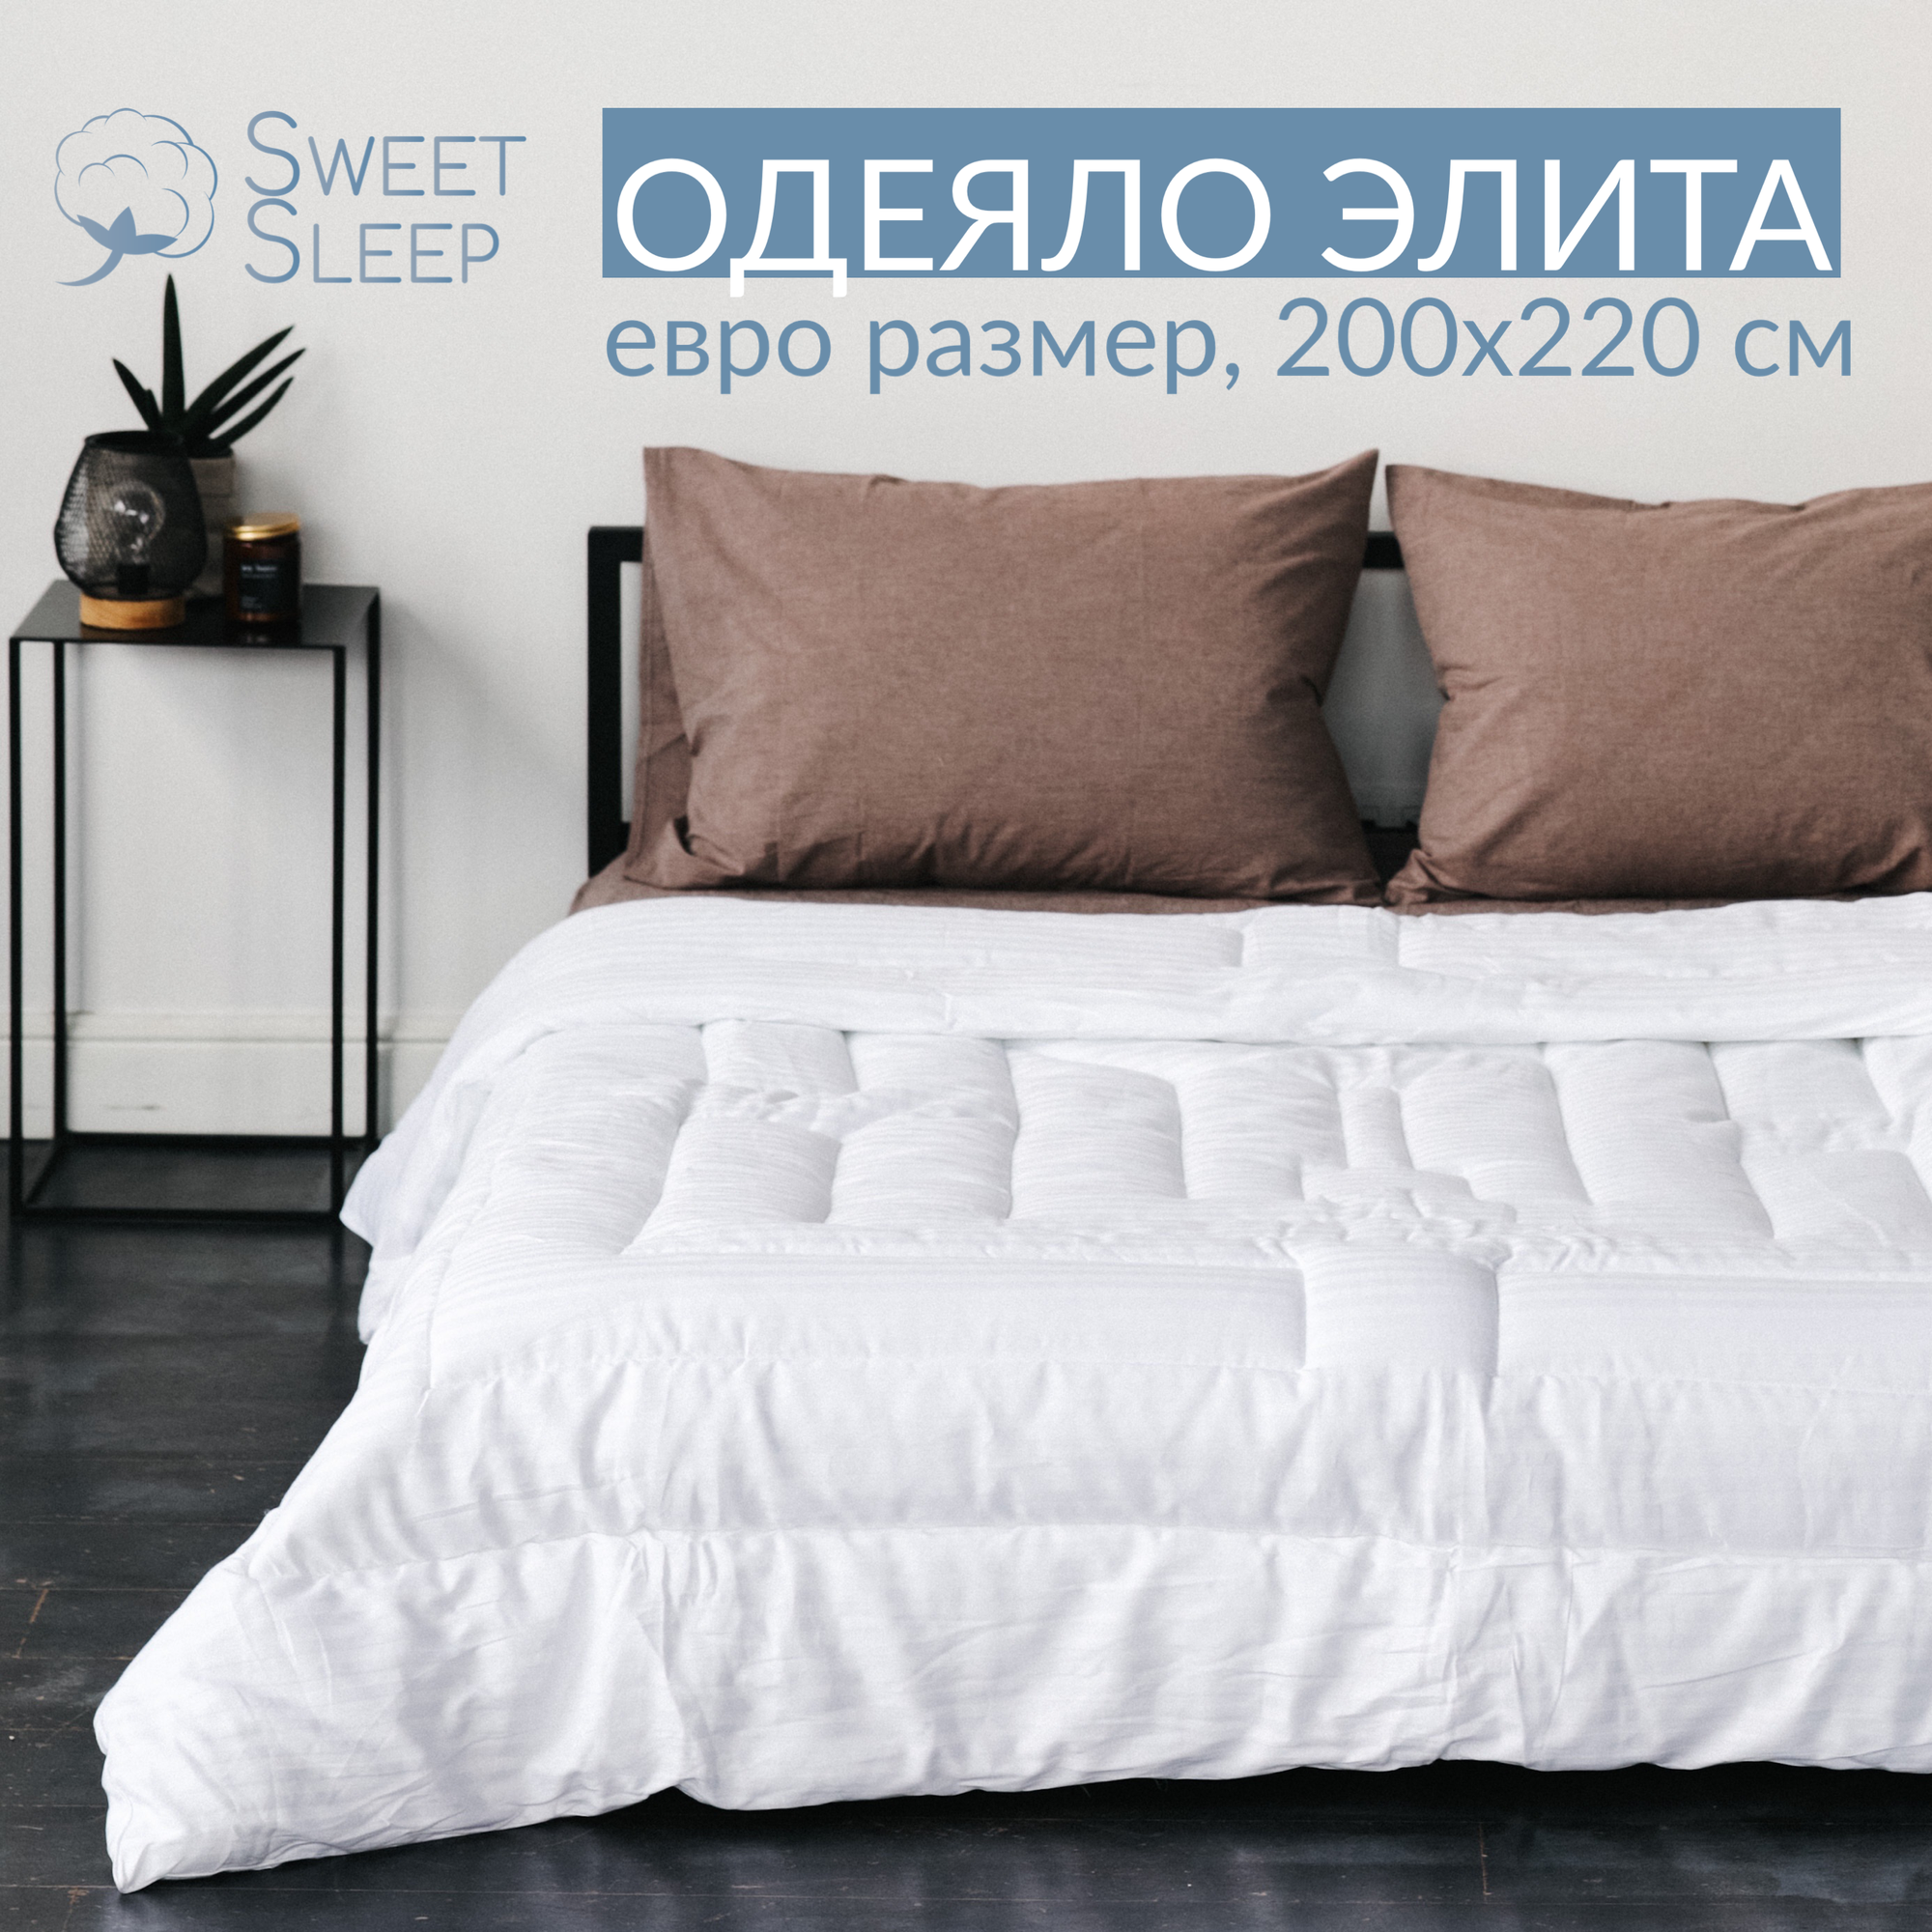 Одеяло Sweet Sleep "Элита" лебяжий пух 200*220 см - фотография № 1